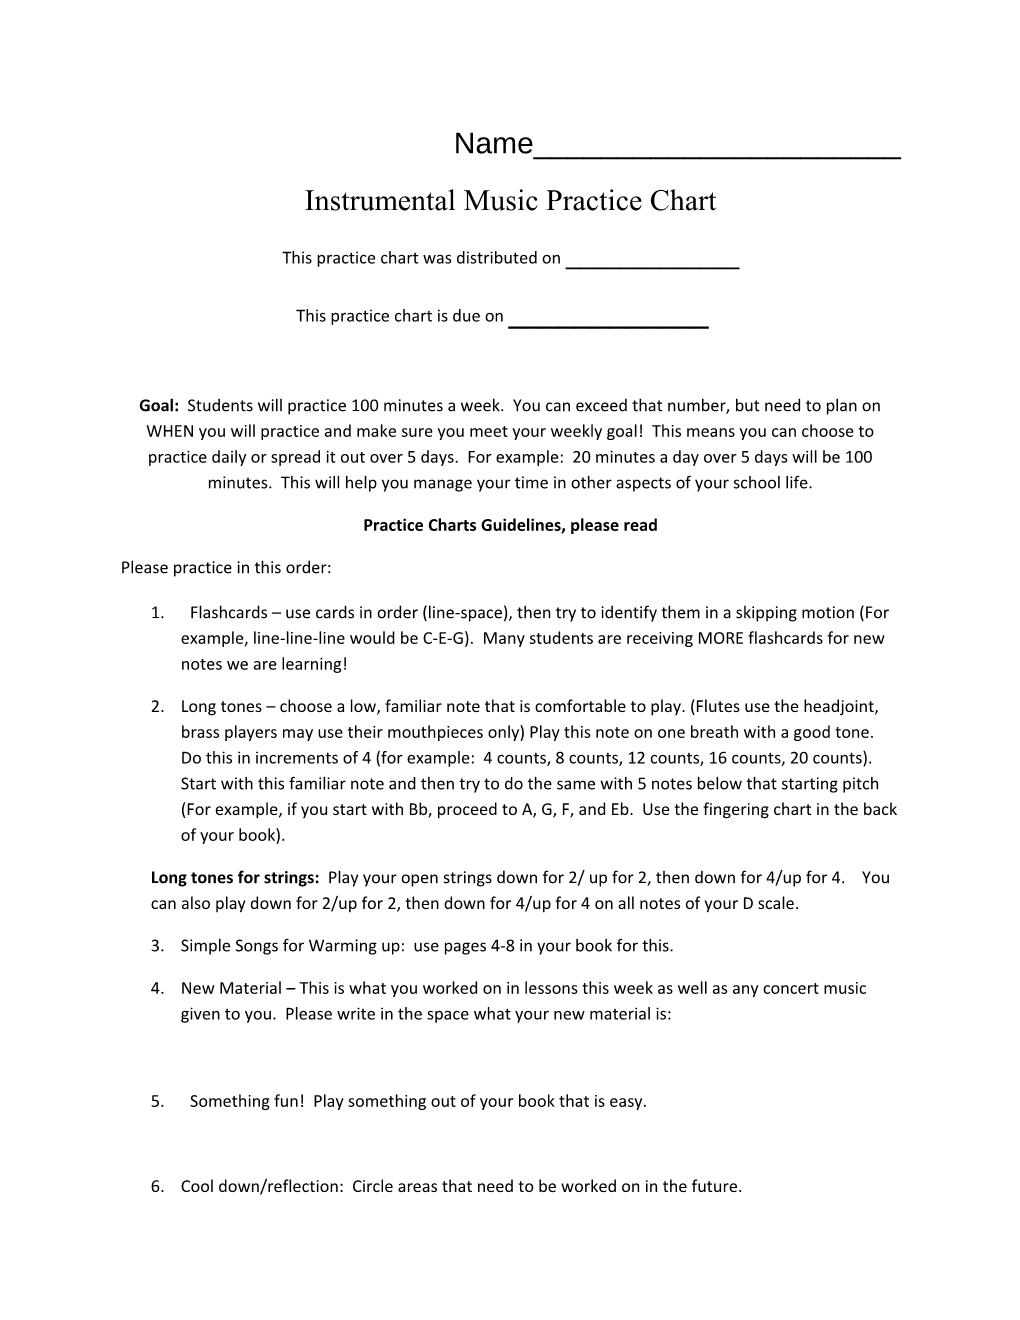 Instrumental Music Practice Chart